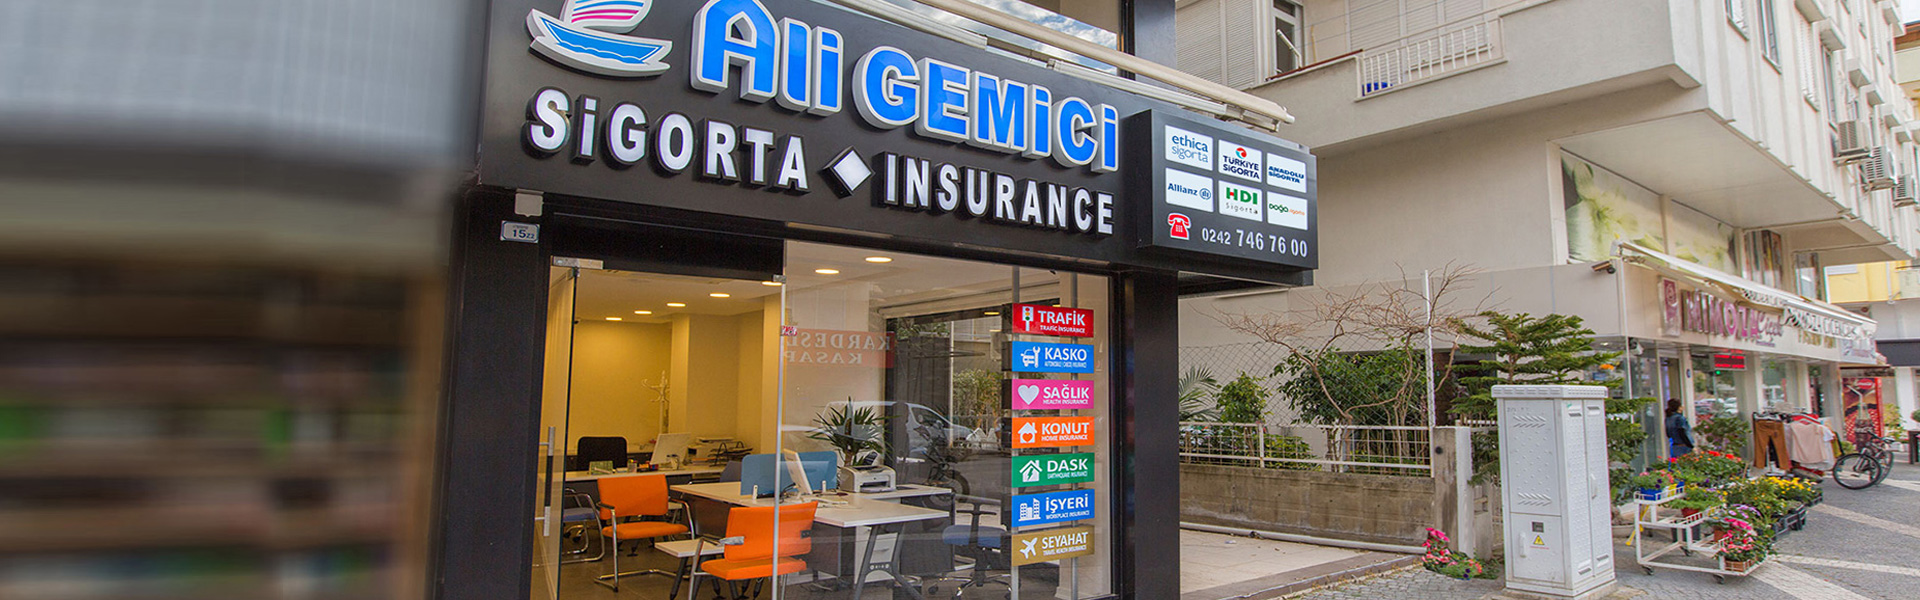 Ali Gemici Sigorta & Insurance Manavgat/Antalya